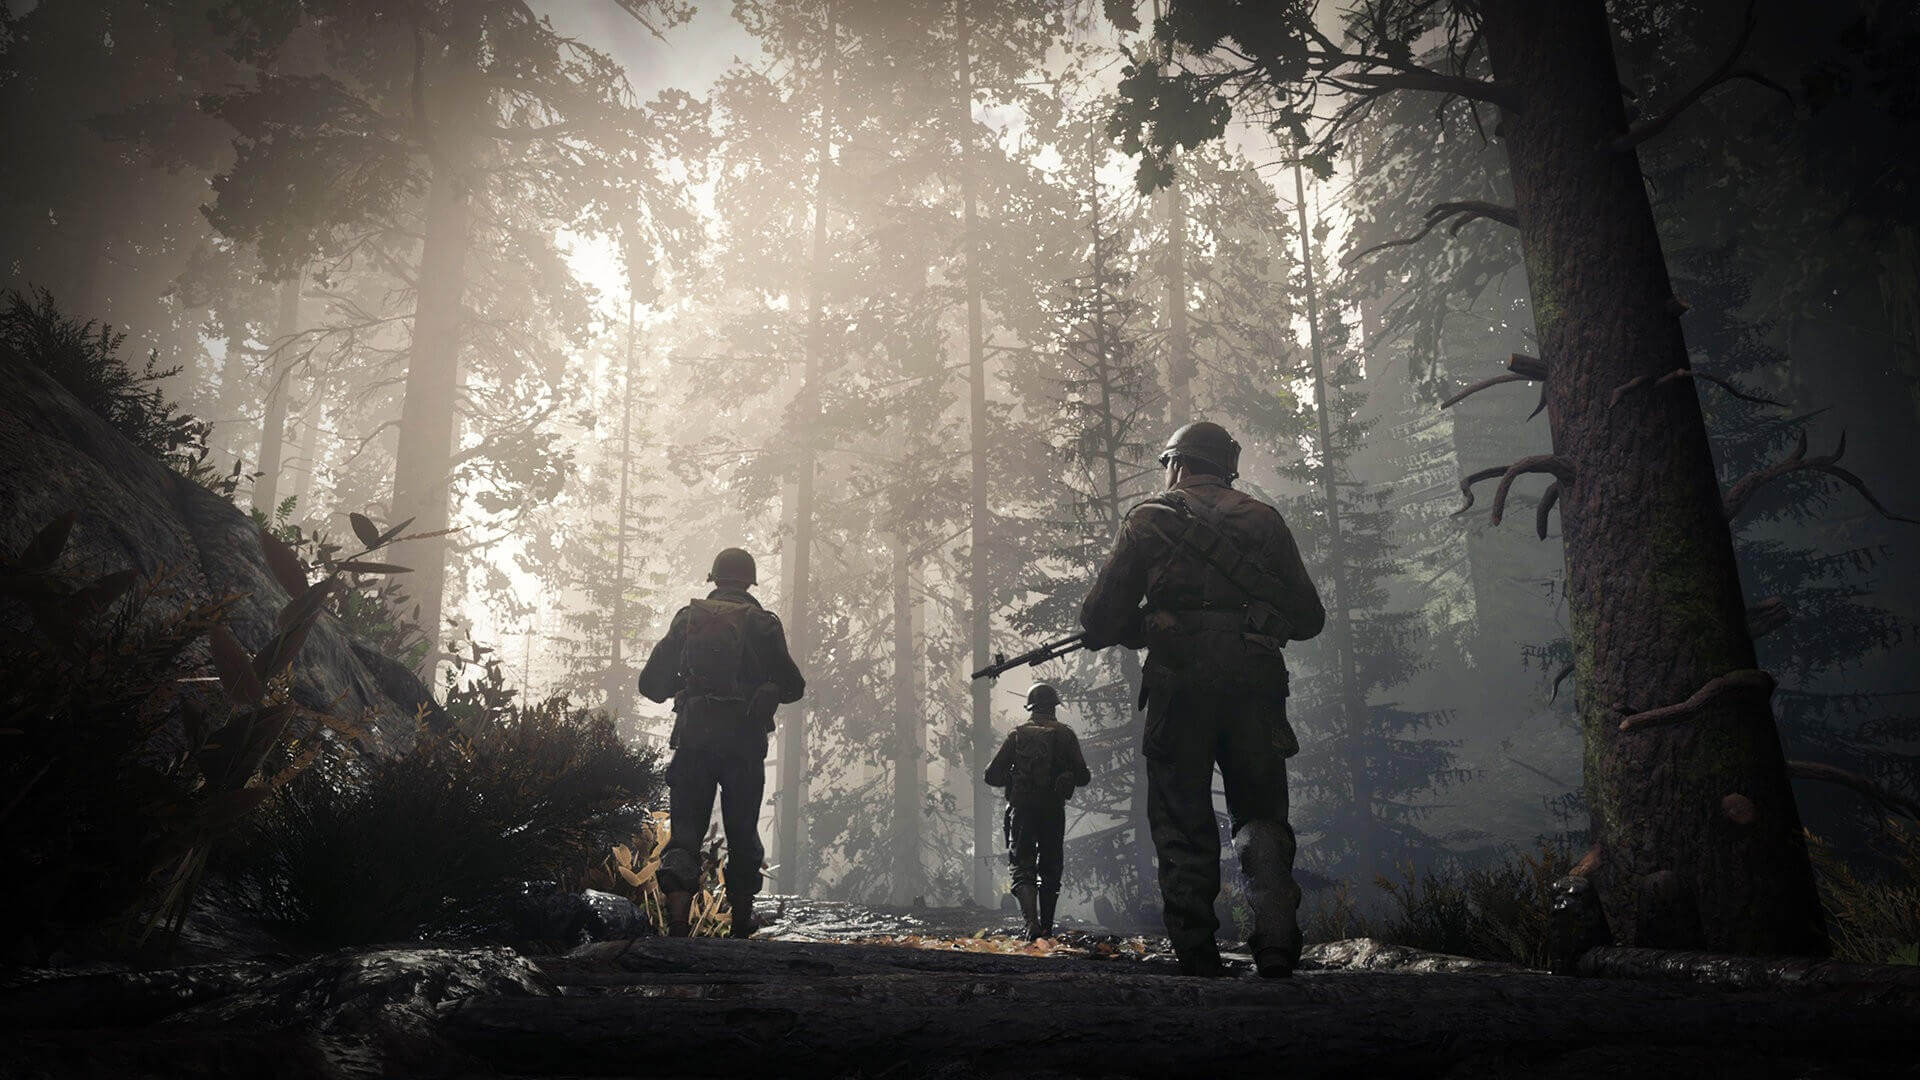 Call of Duty: WW II